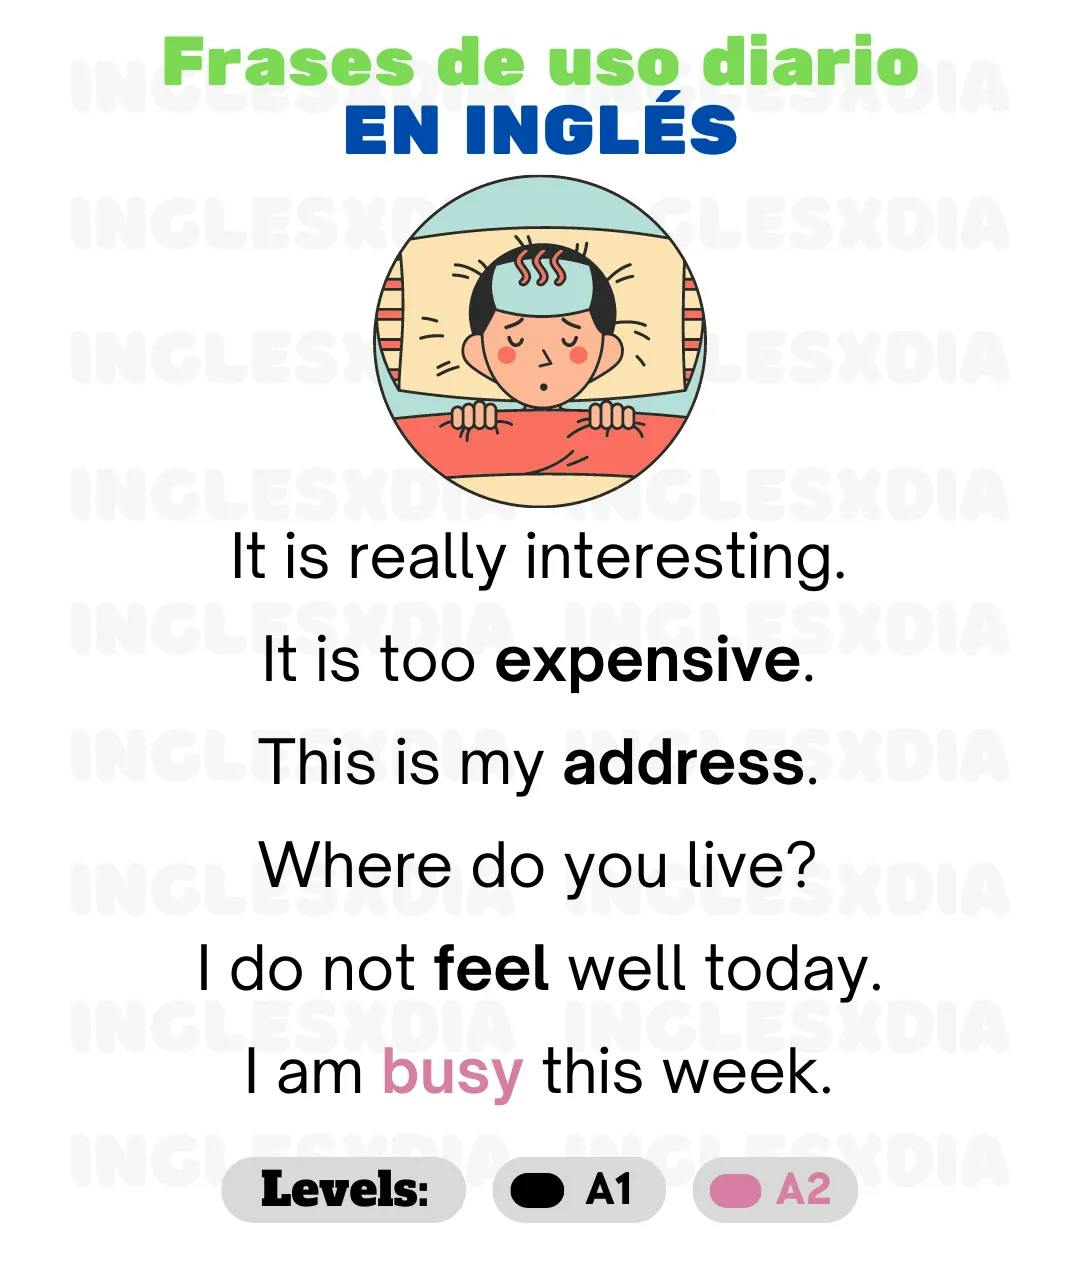 Curso de inglés en línea: frases en inglés de uso diario · It is really interesting ...